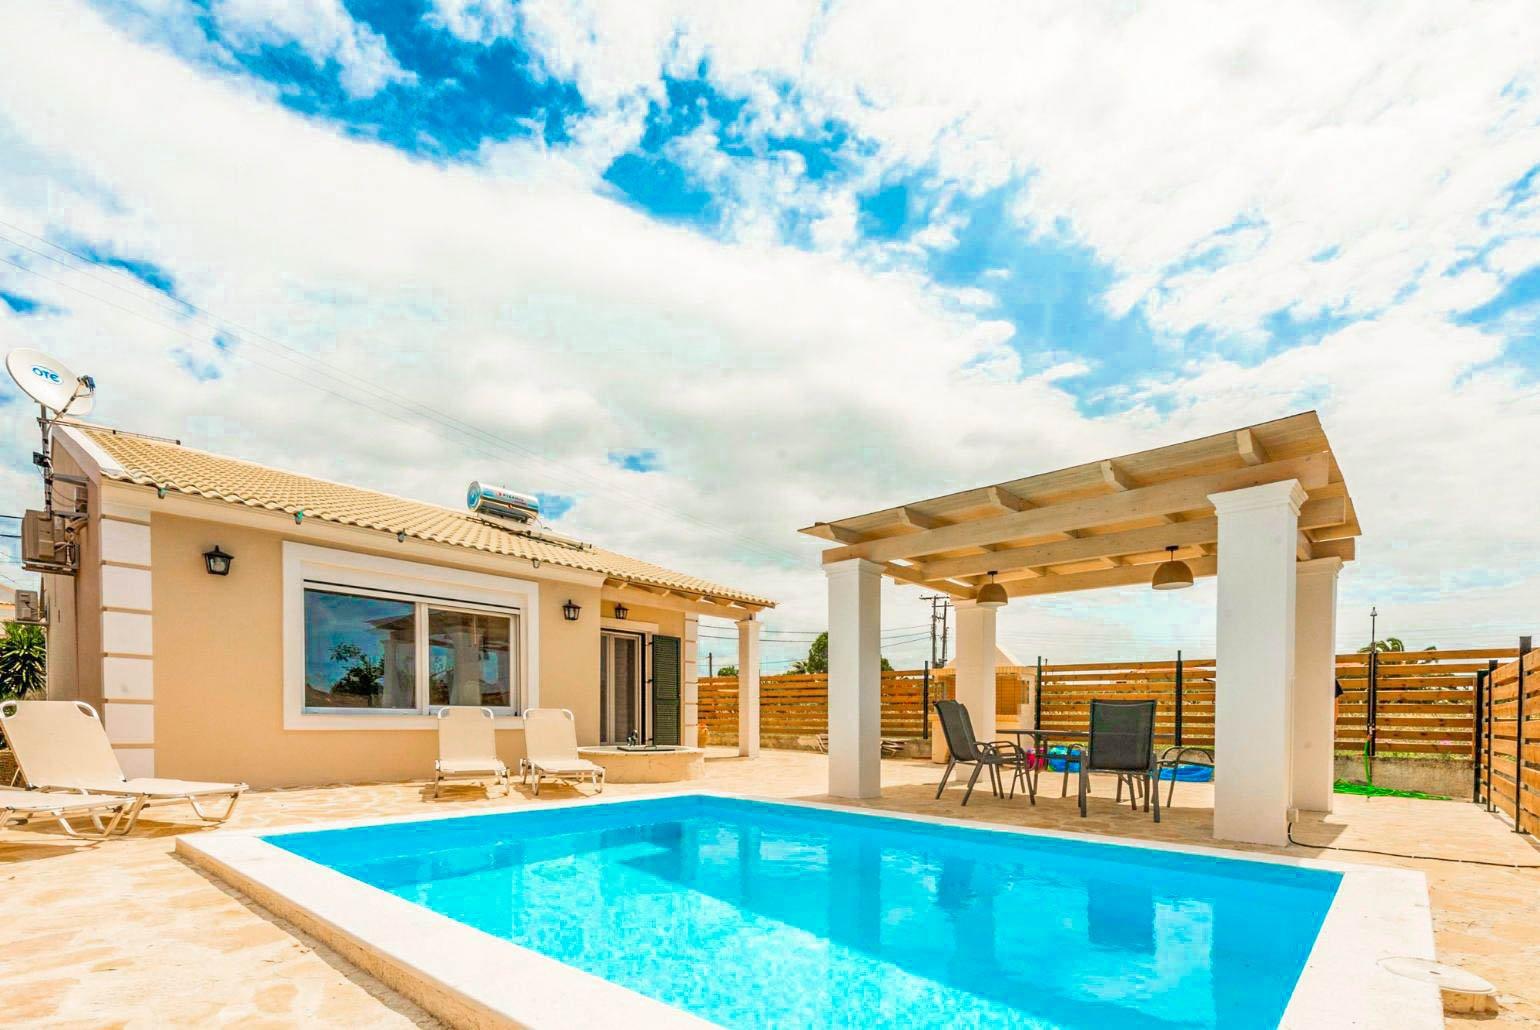 Villa with a private pool